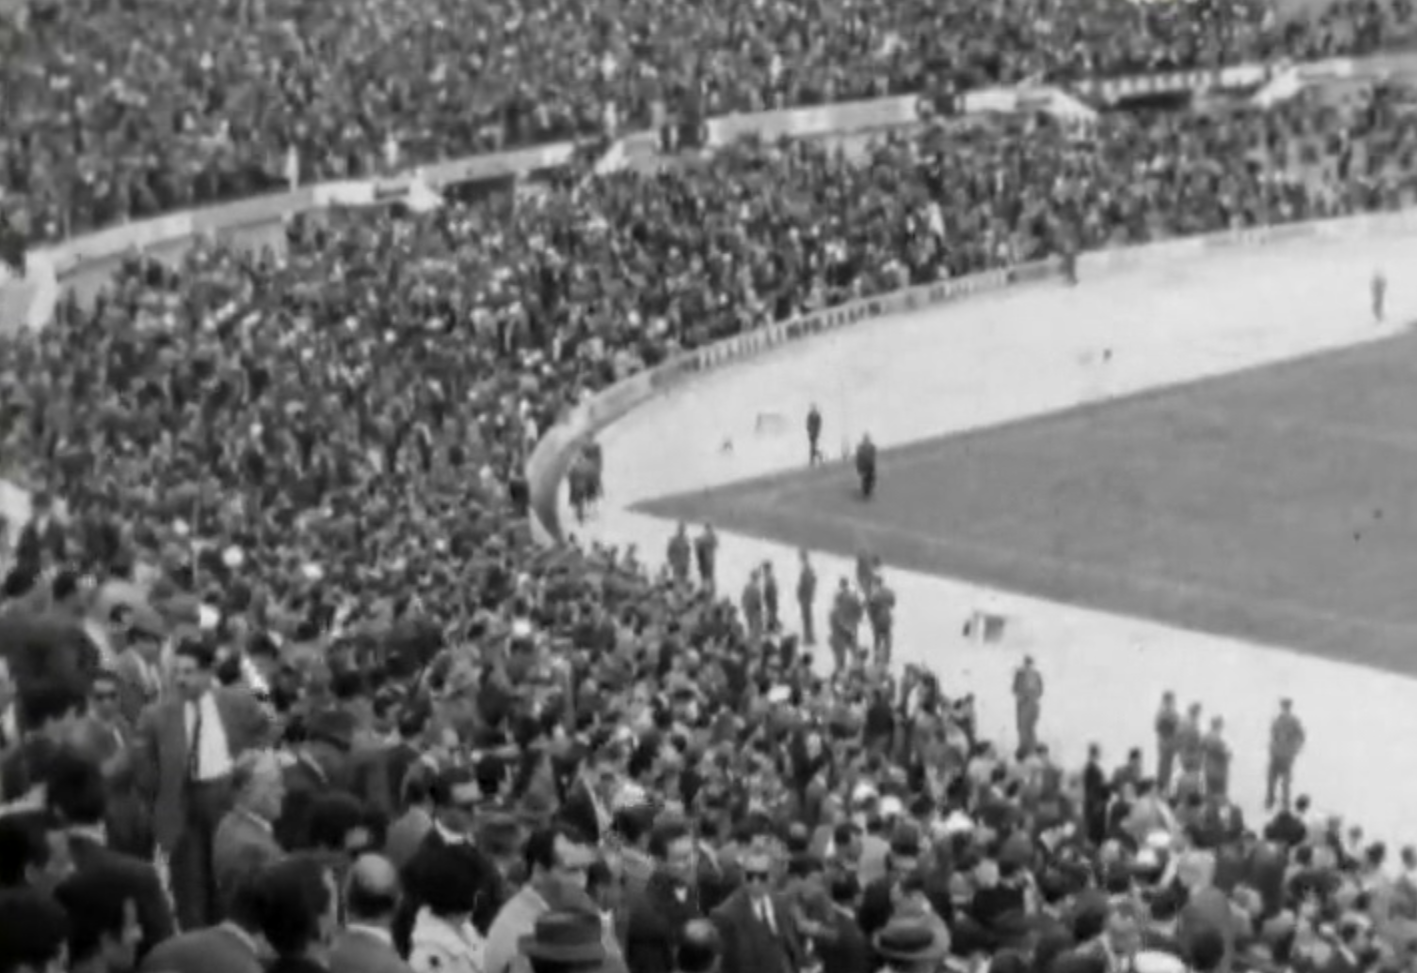 Portugalia - Polska 4:0 (08.04.1961)